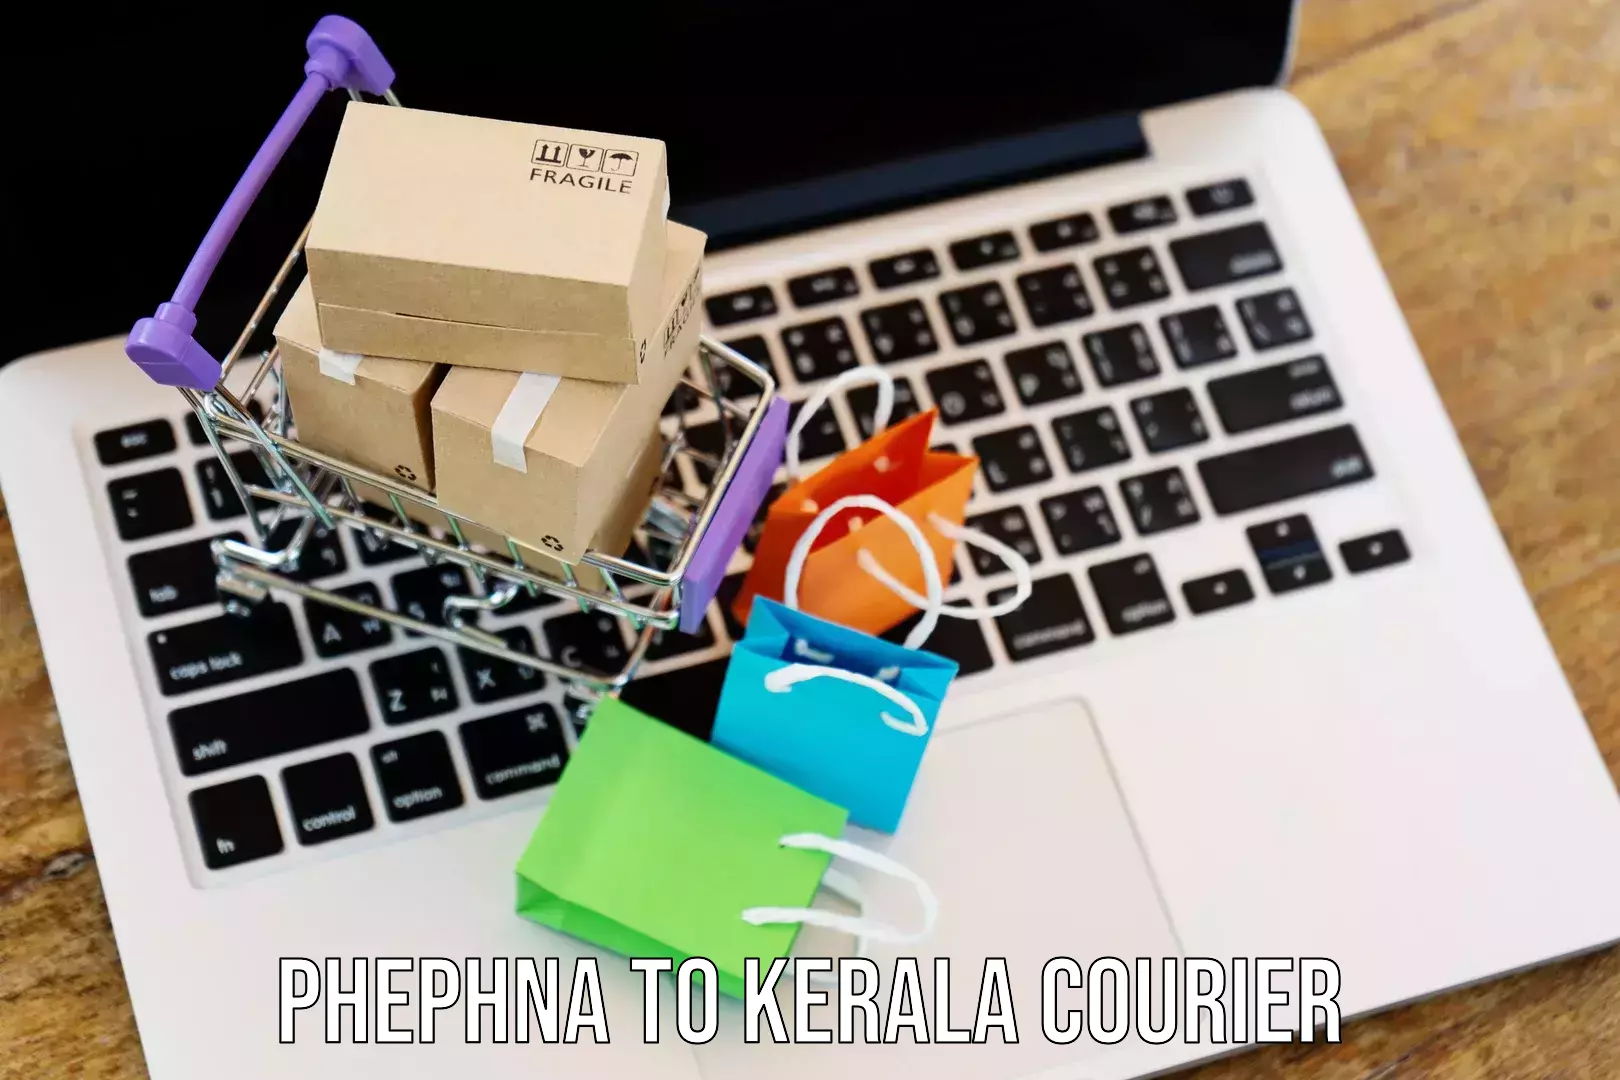 Courier app Phephna to Kannur